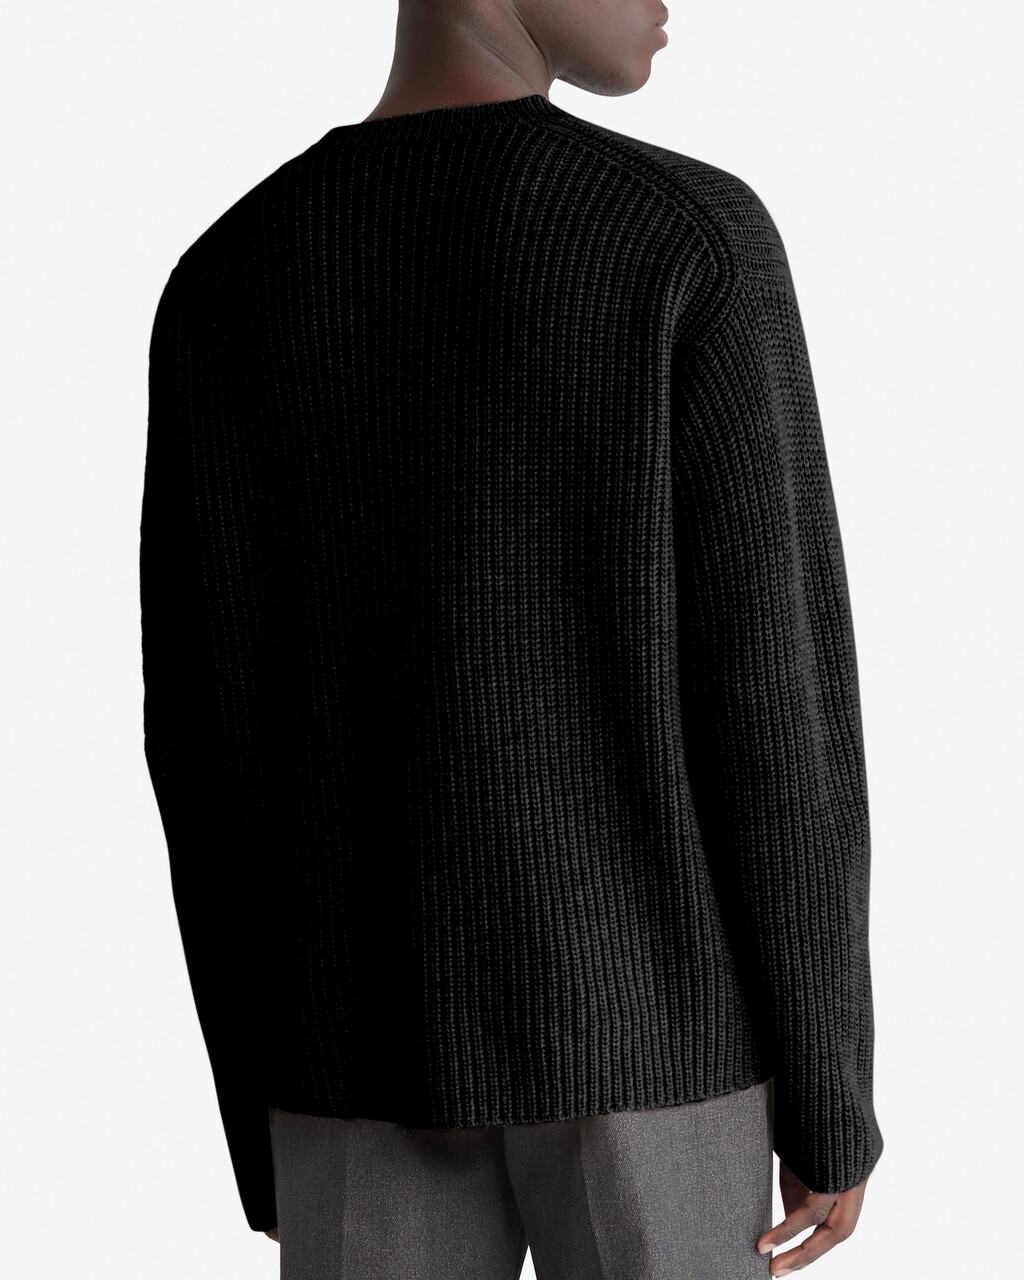 Standards Ribbed Crewneck Sweater, Black Beauty, hi-res